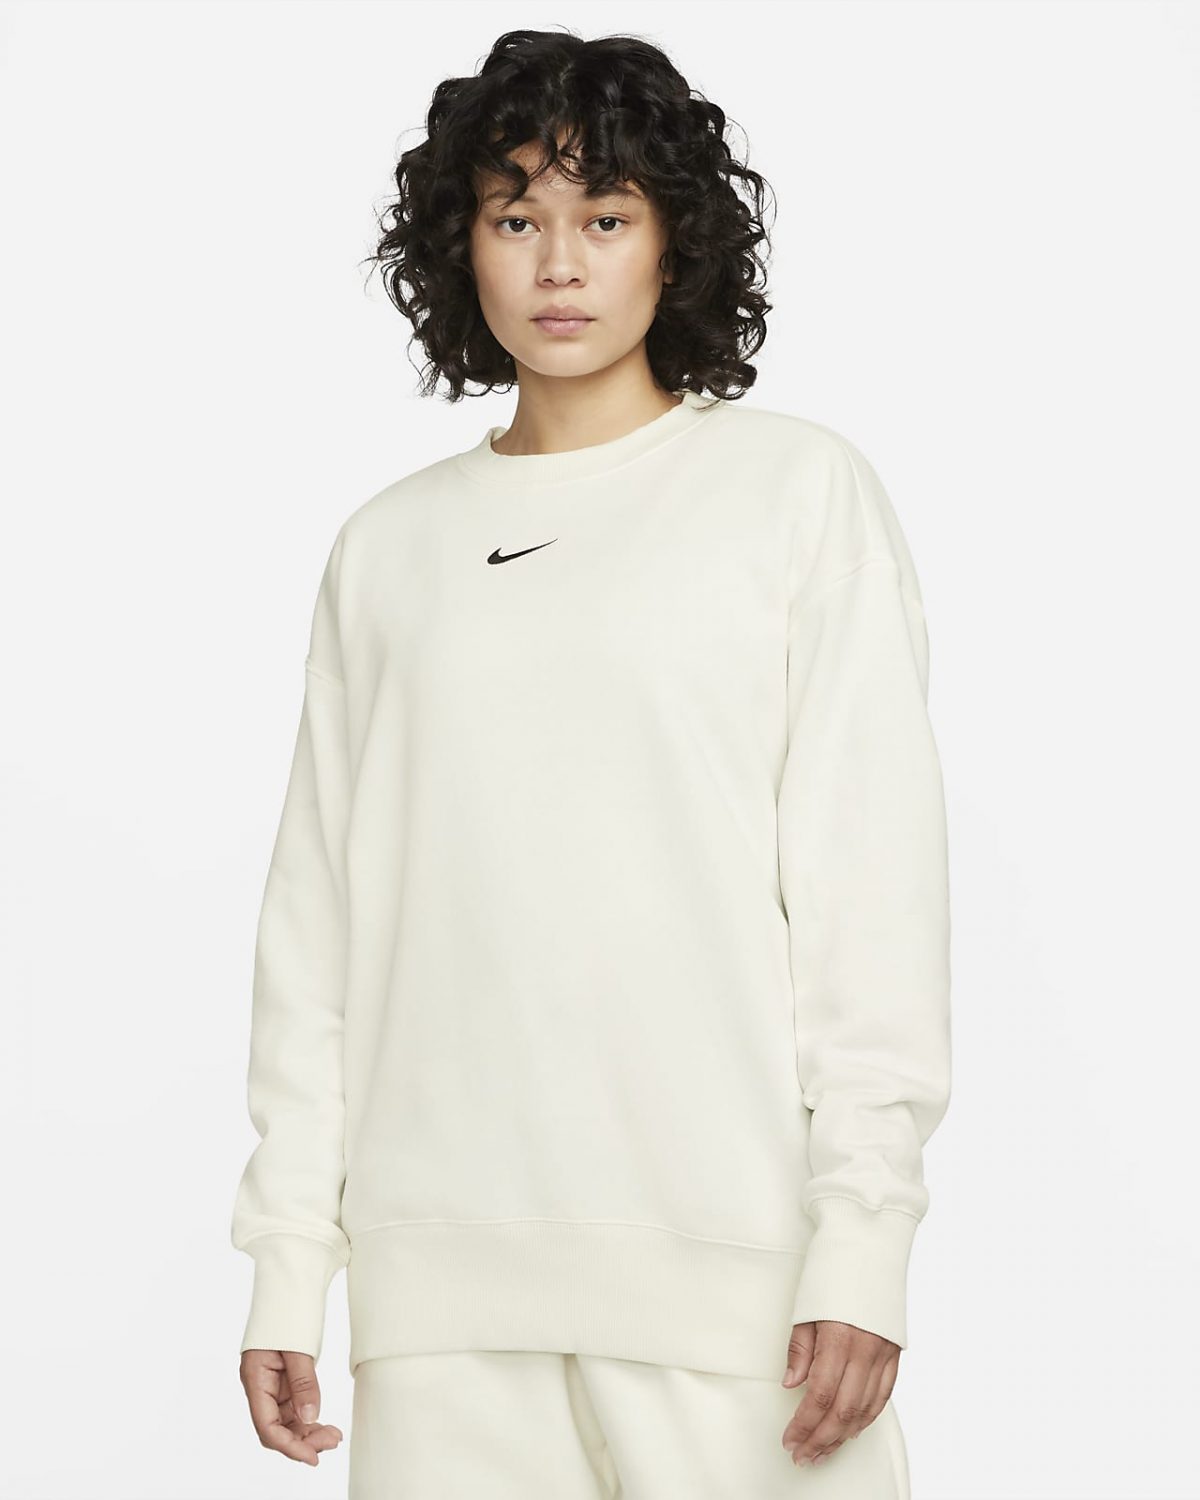 Женский свитшот Nike Sportswear Phoenix Fleece черный фото